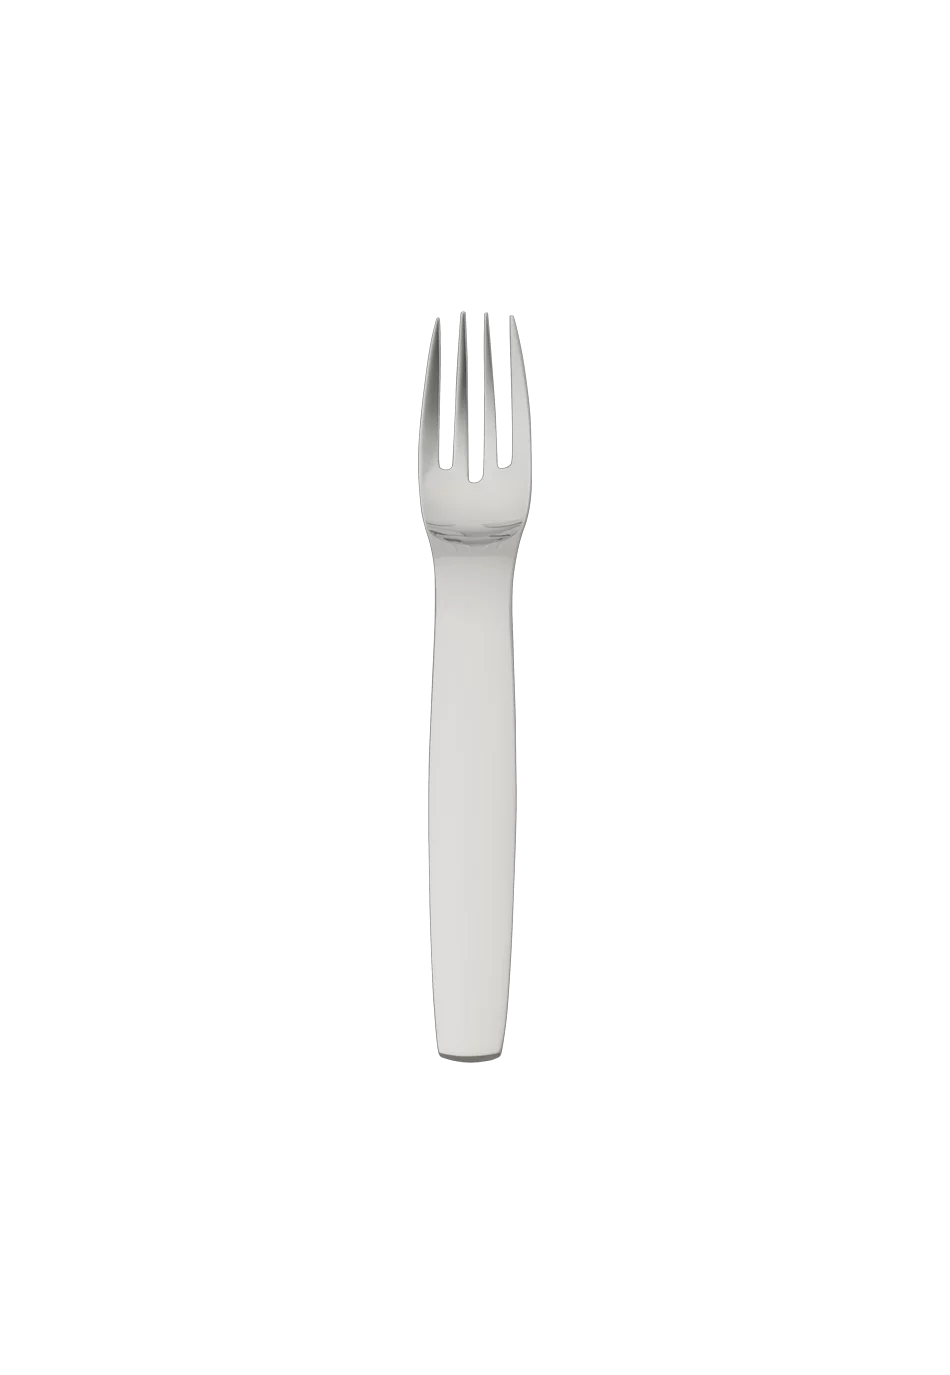 Pax Dessert Fork (18/8 stainless steel)